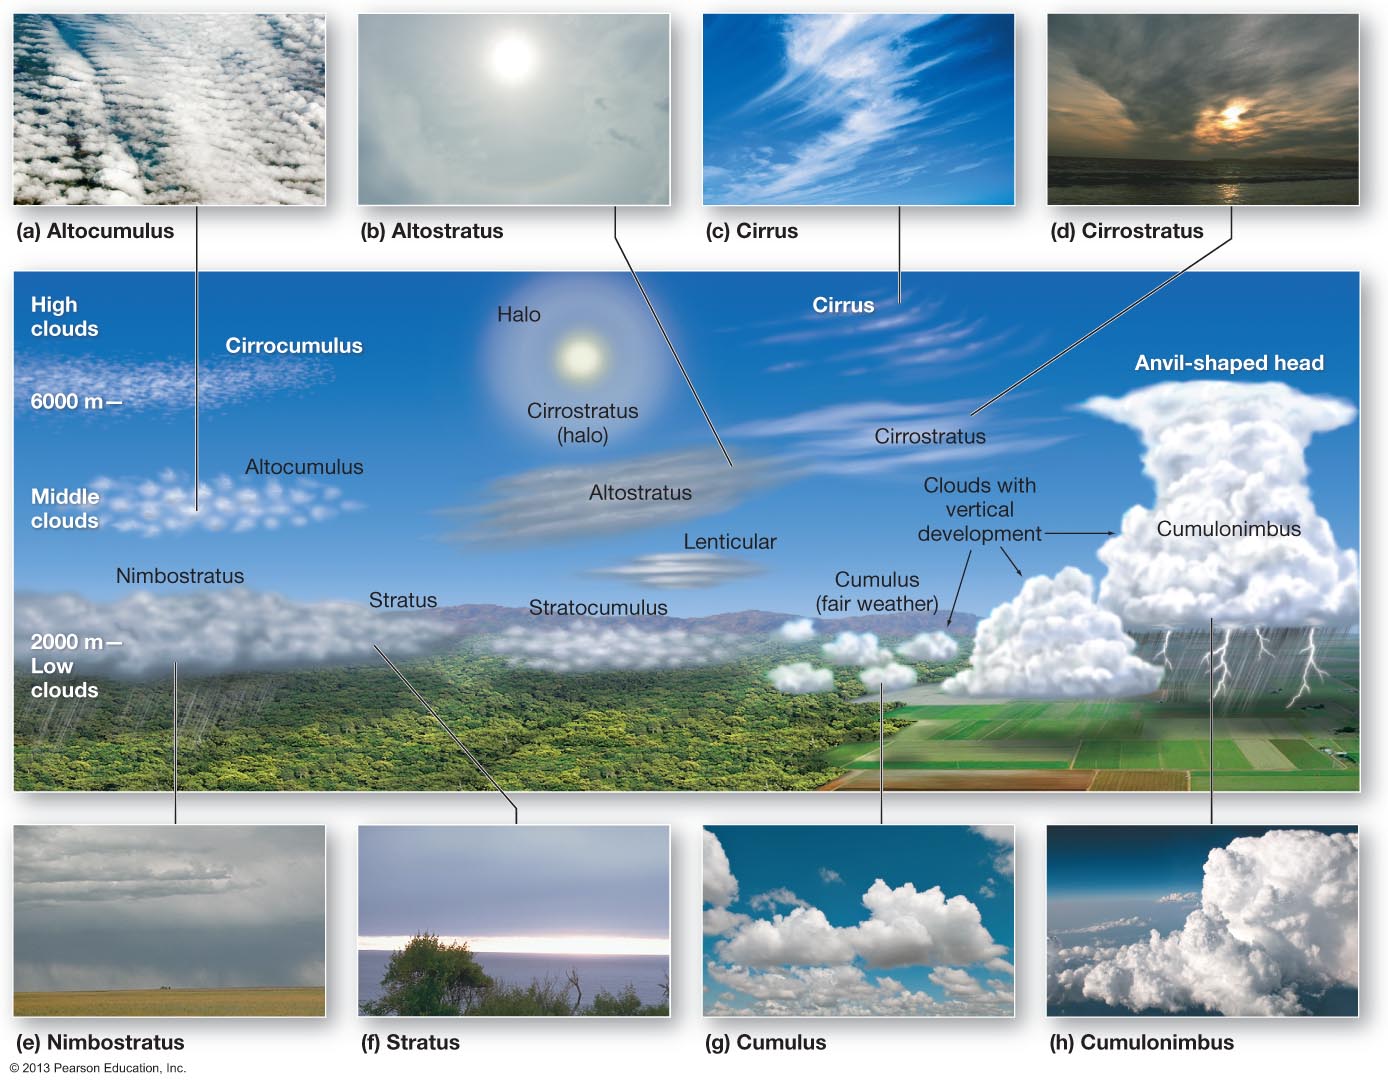 Cumulonimbus clouds produce thunderstorms